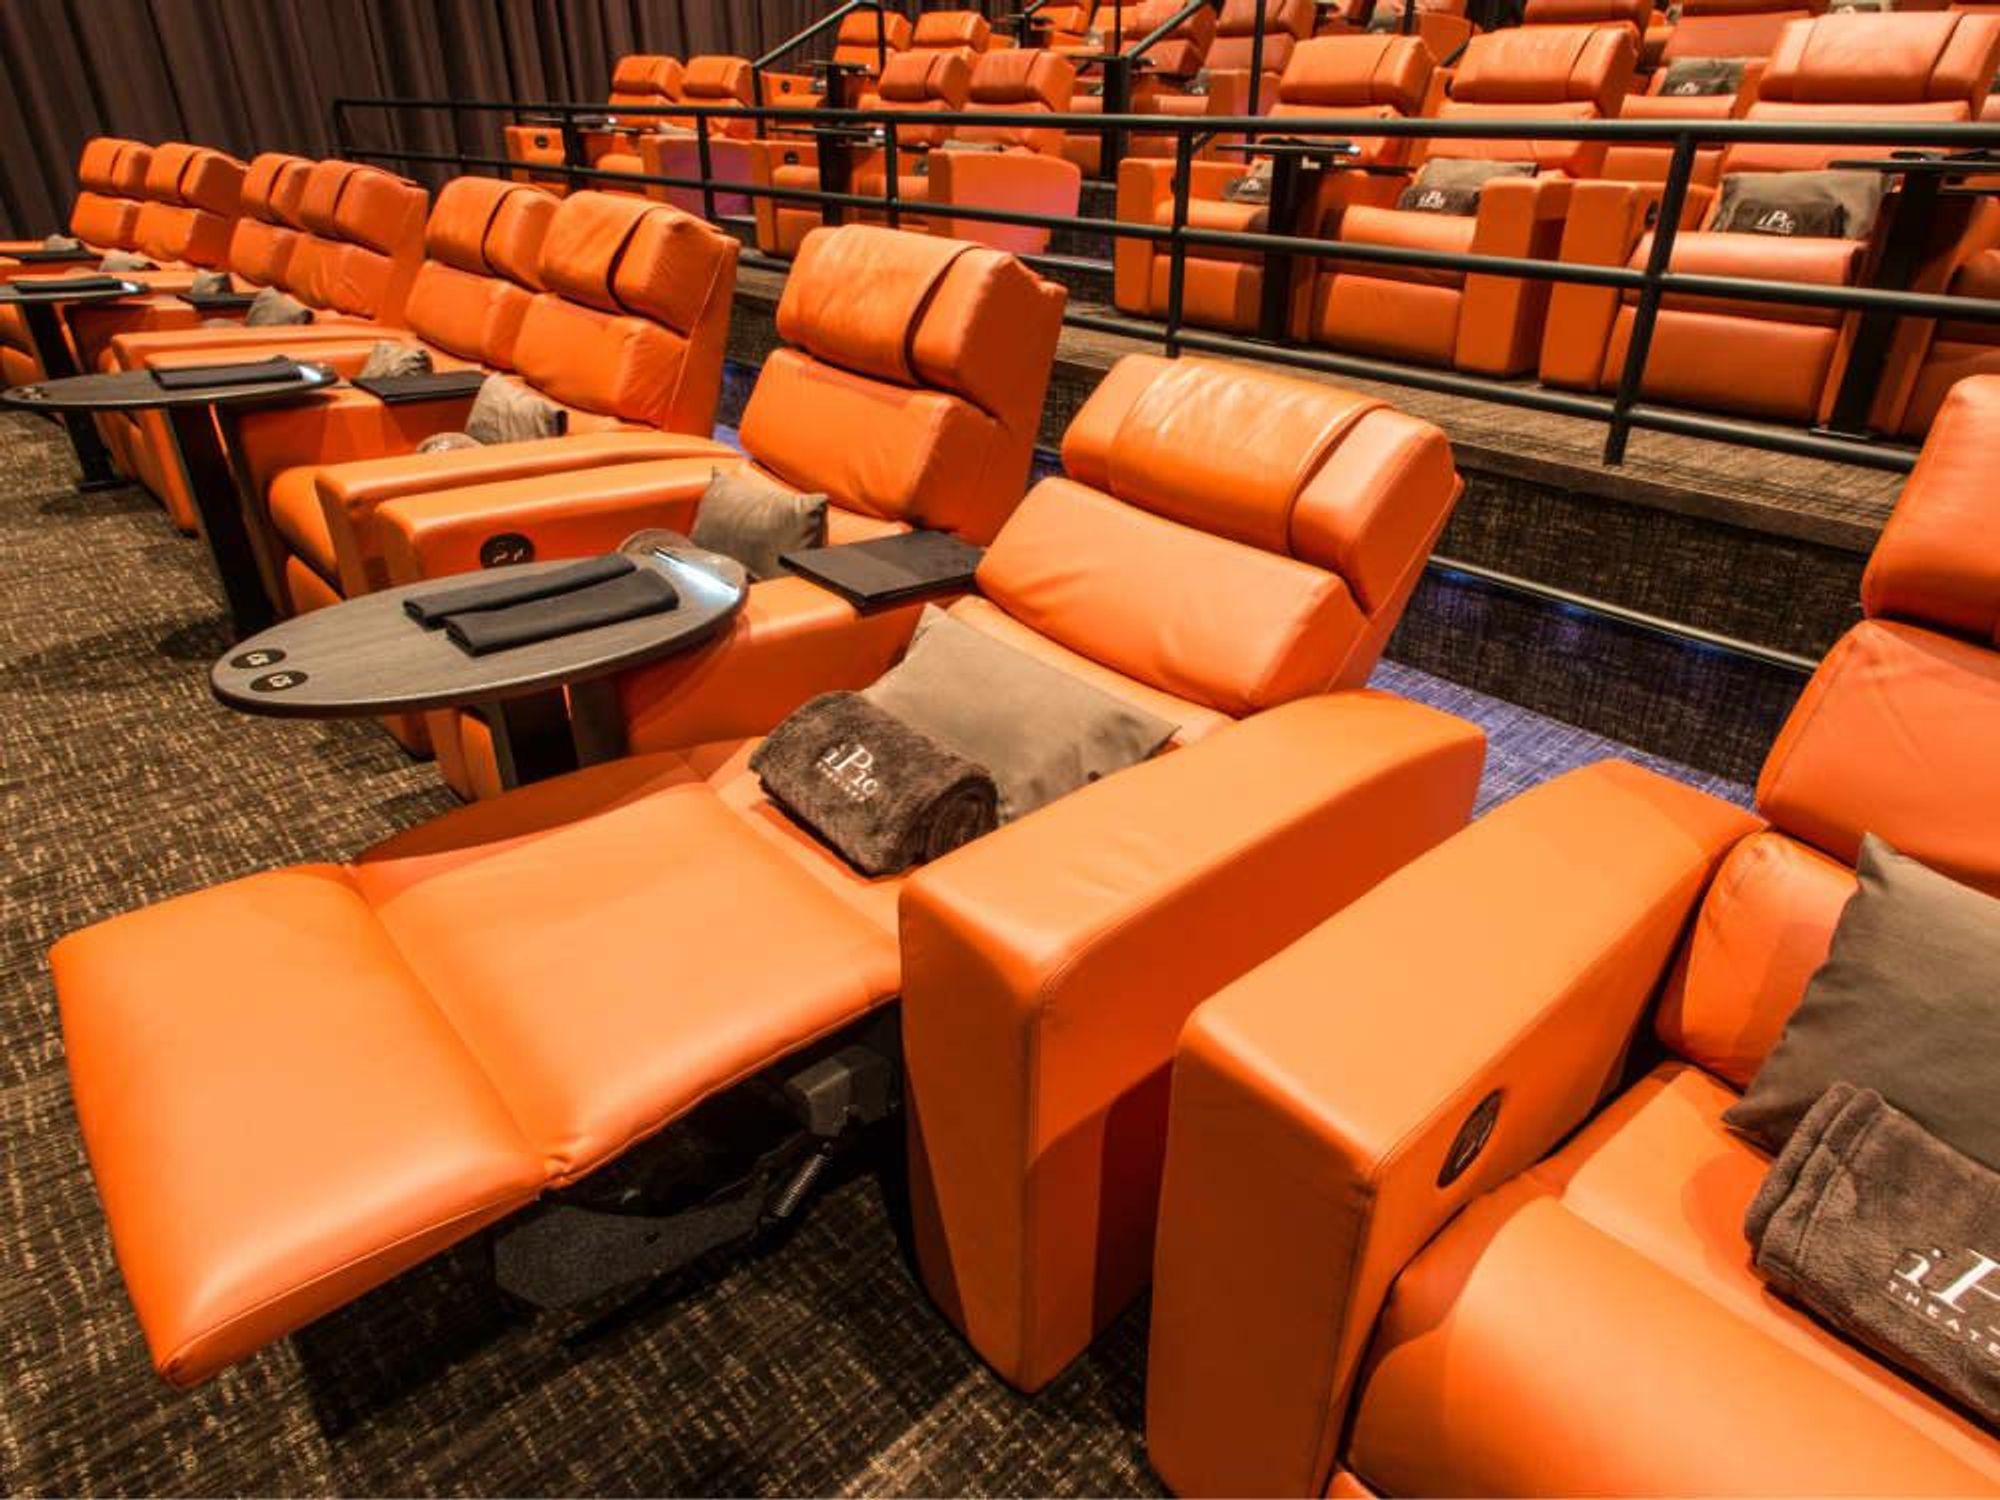 iPic Theater seating